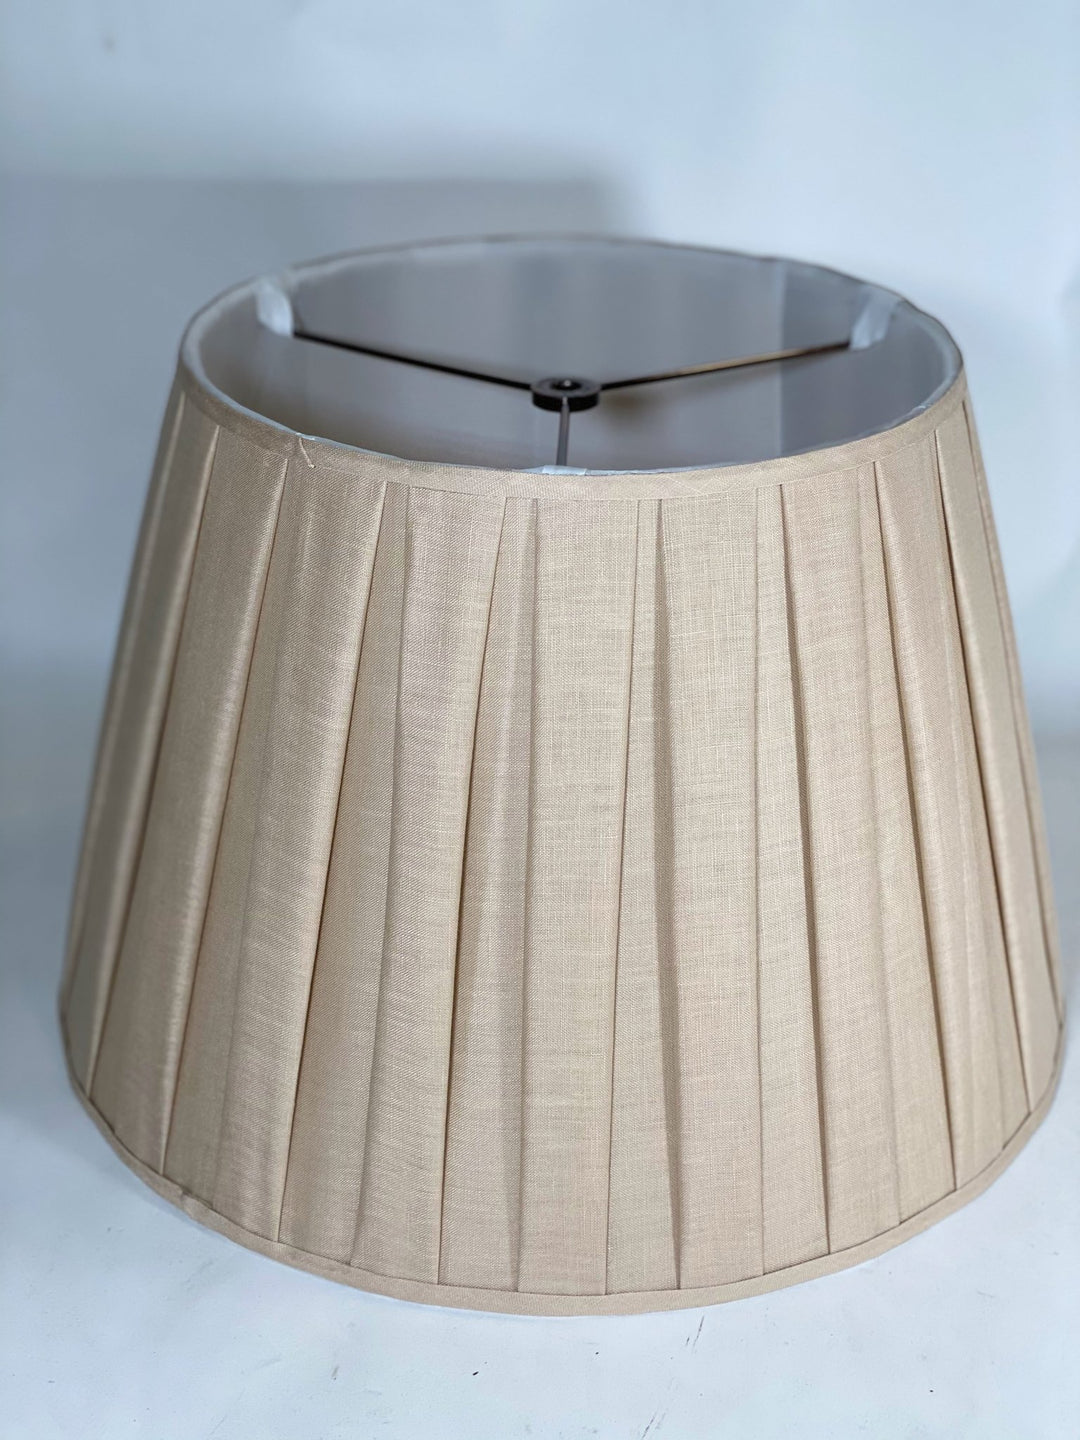 Box Pleat Linen Drum - Lux Lamp Shades